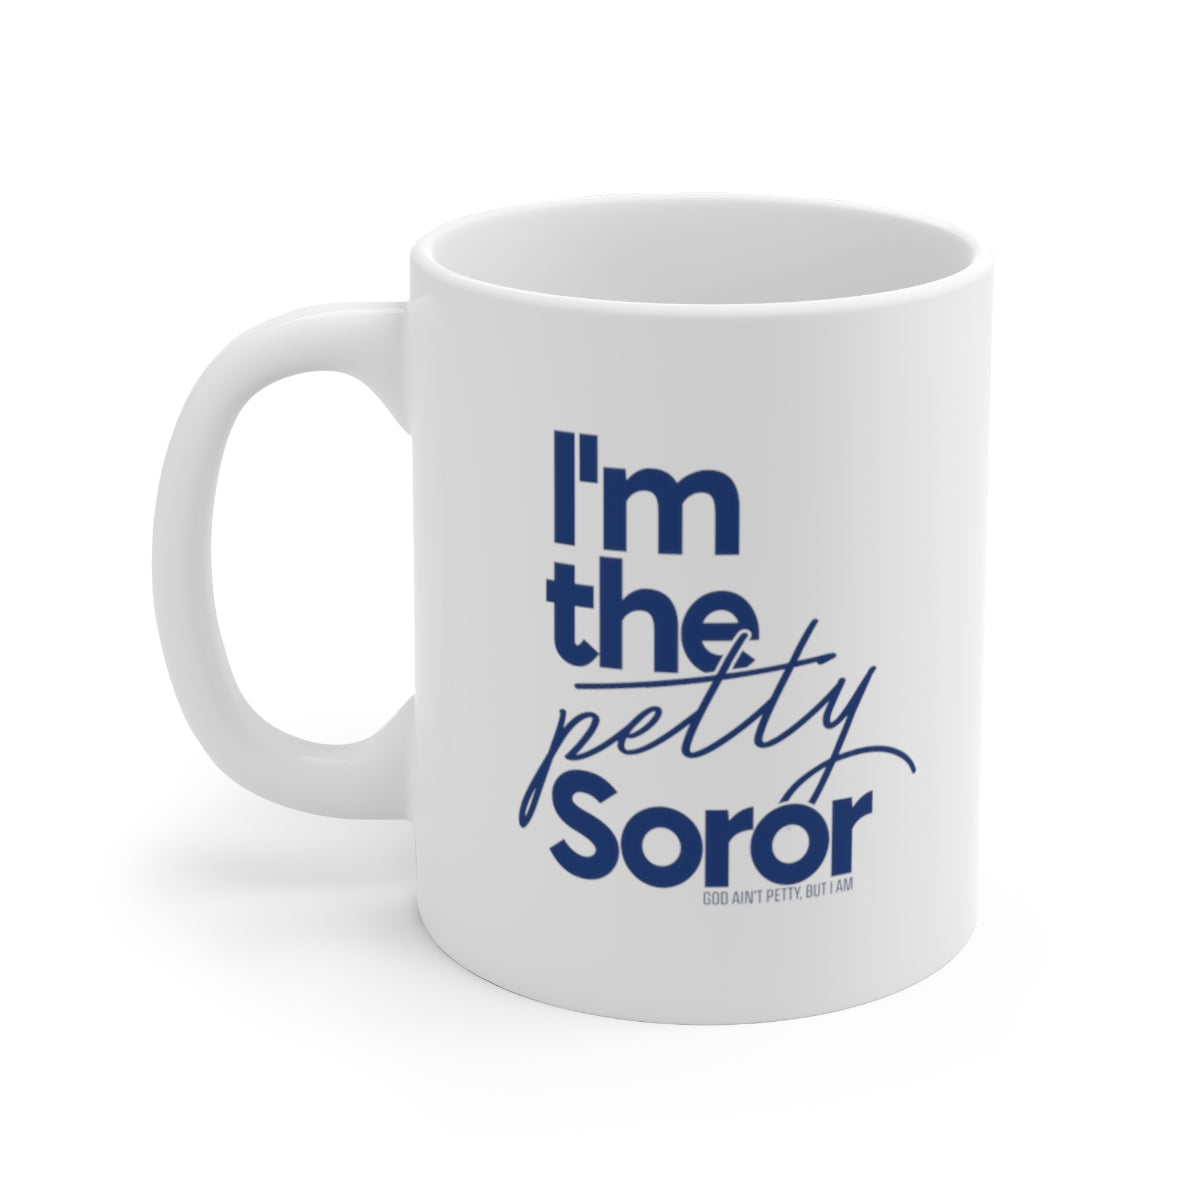 I'm the Petty Soror Mug 11oz (Blue)-Mug-The Original God Ain't Petty But I Am